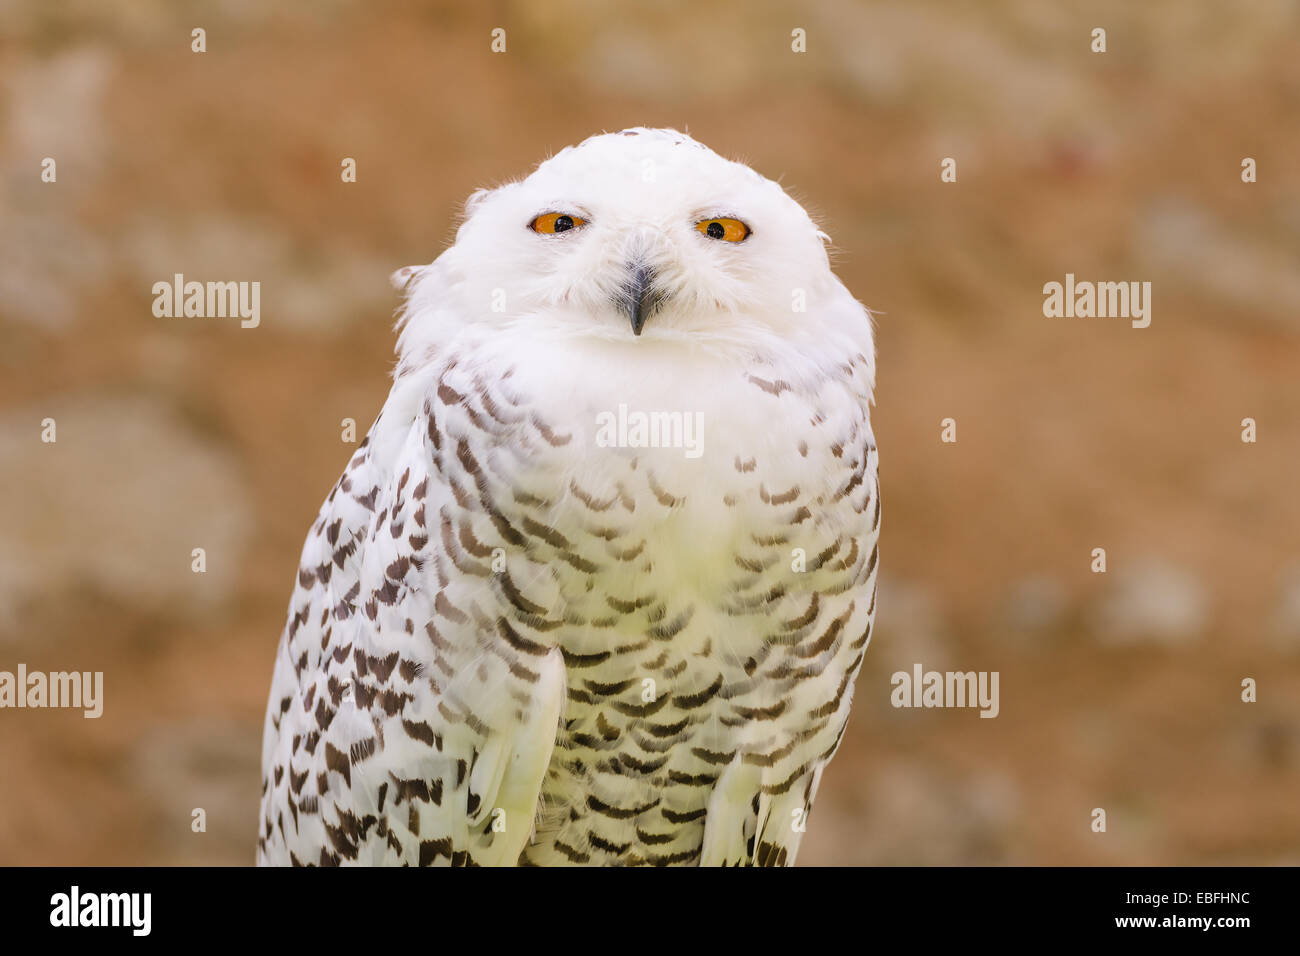 Portrait of quiet predator wild bird snowy white owl staring at camera lens with yellow eyes Stock Photo